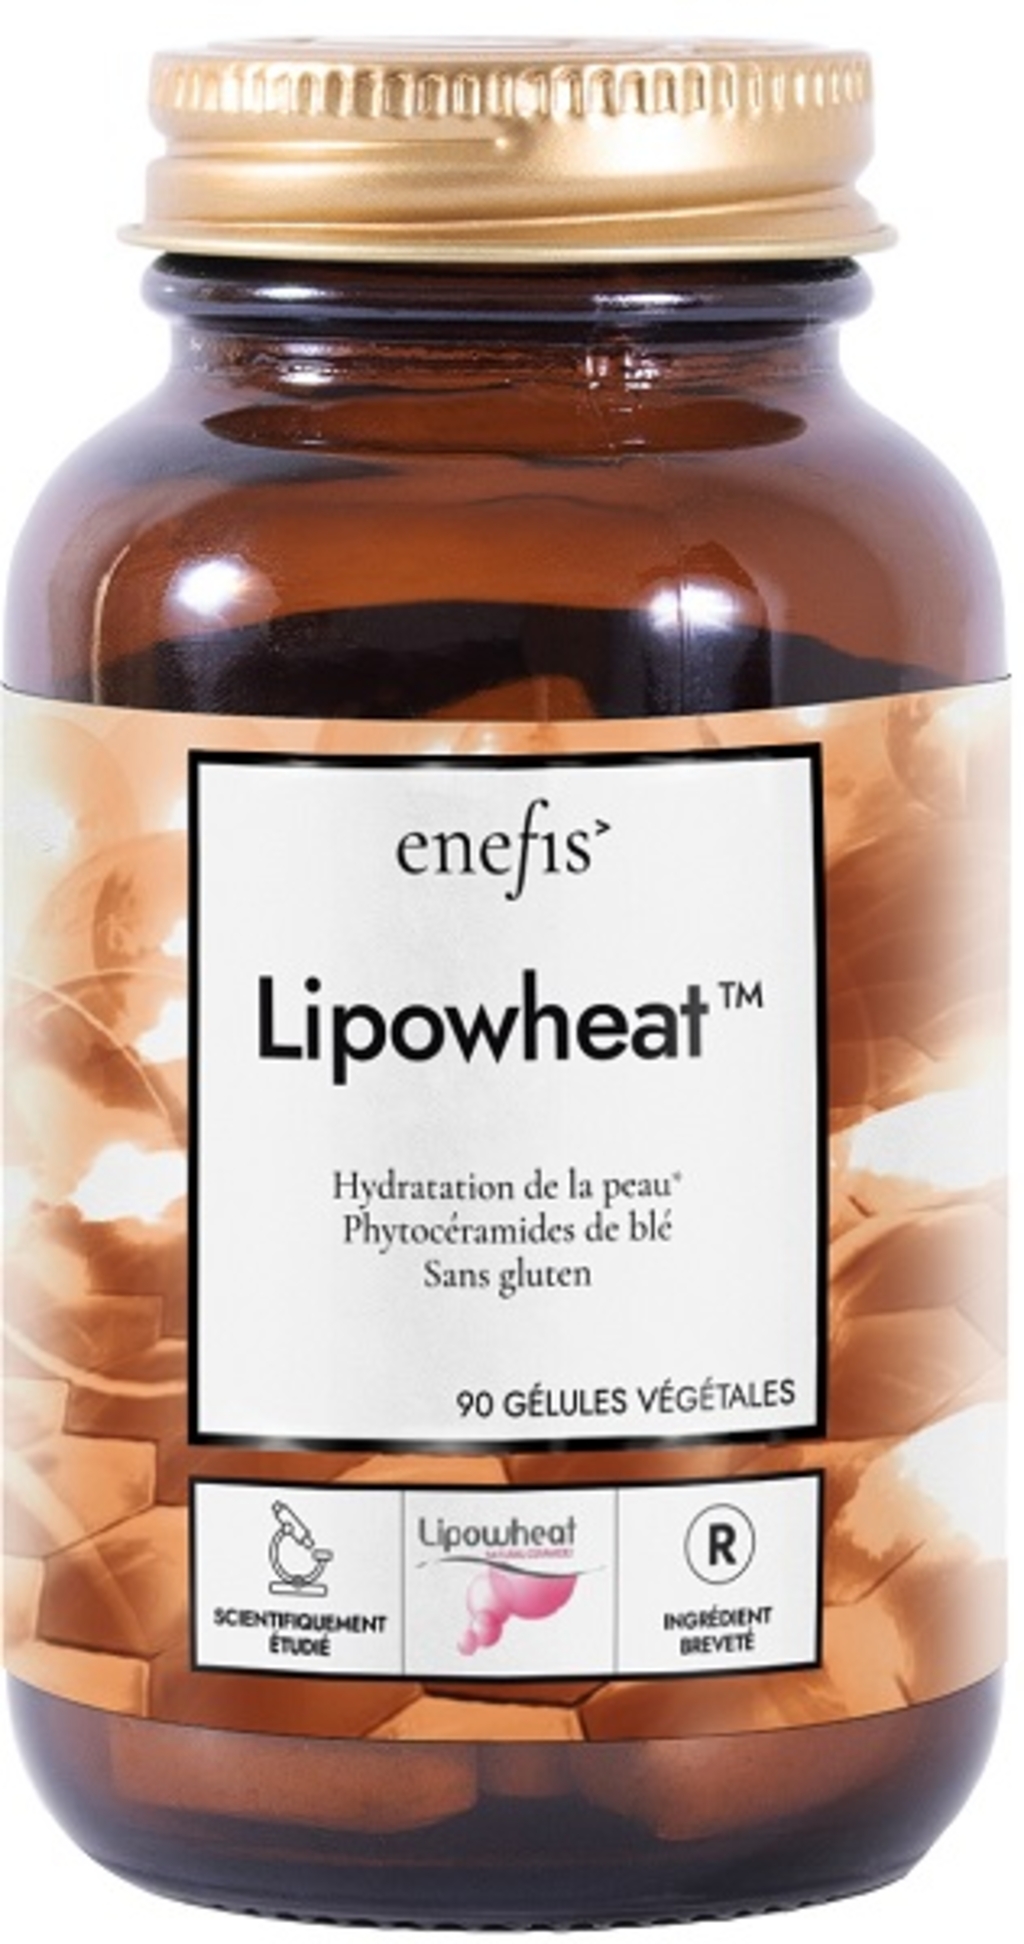 Lipowheat™ , hydratation de la peau